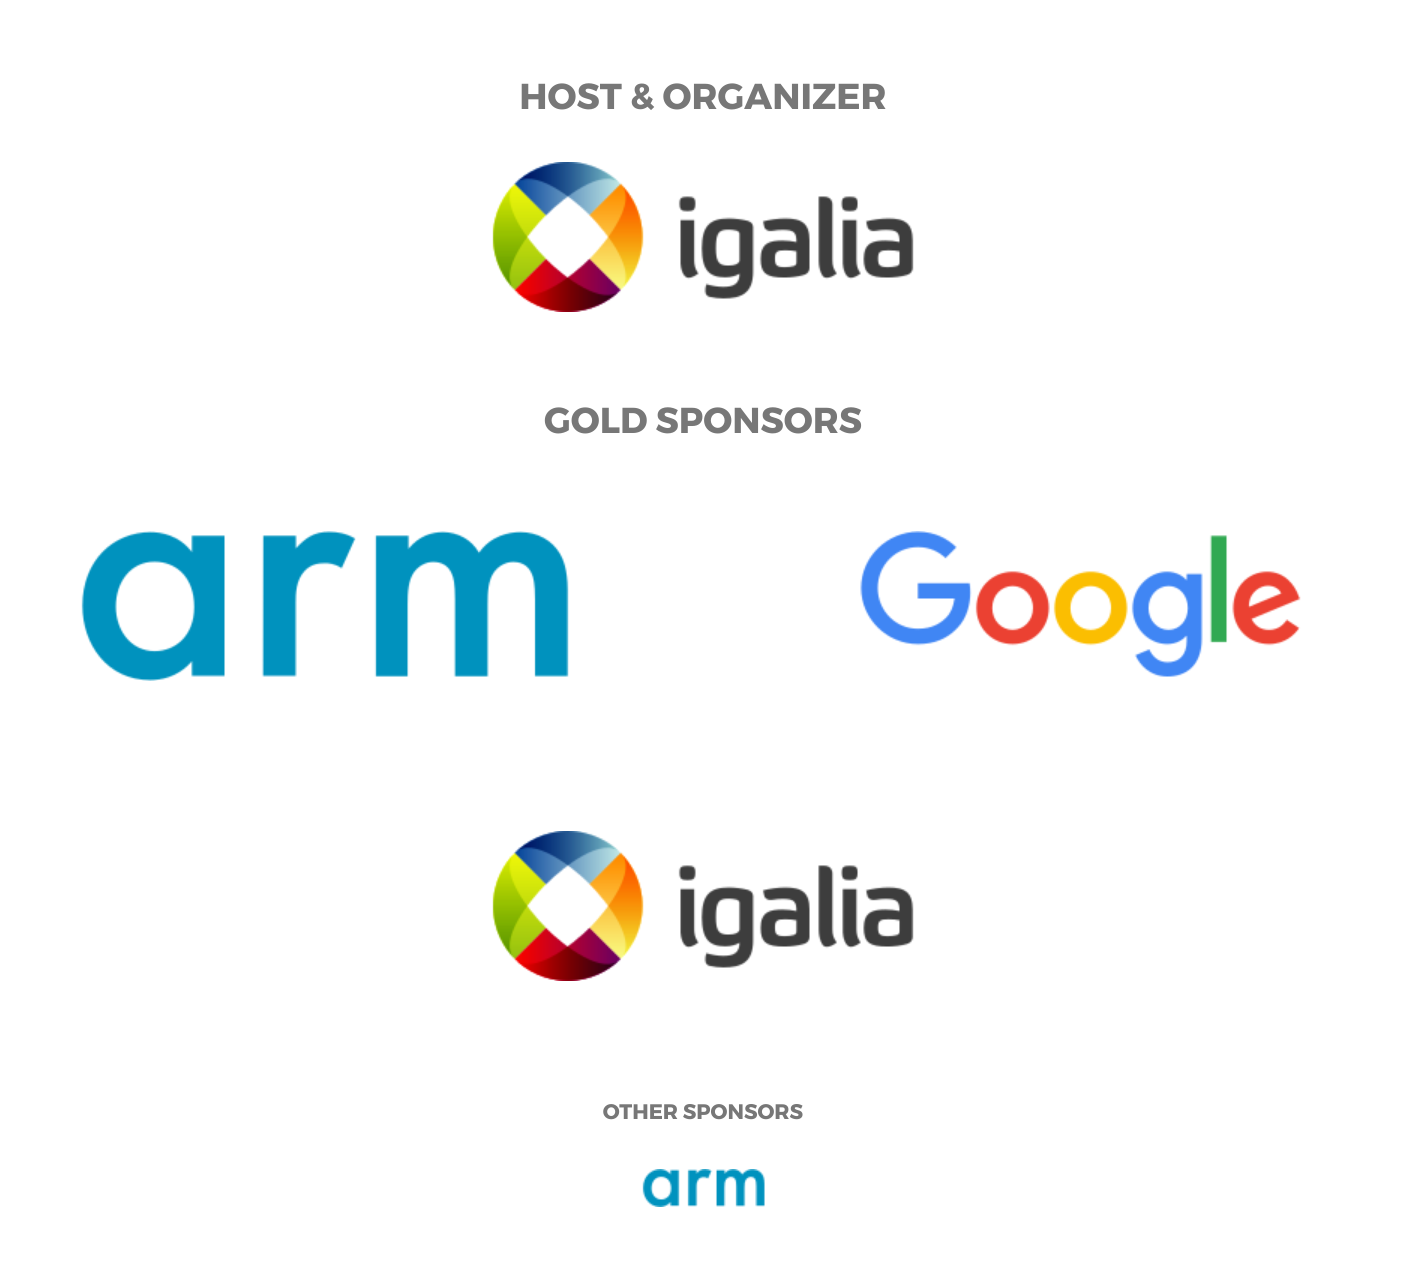 Web Engines Hackfest 2022 Sponsors - Host & Organizer: Igalia. Gold Sponsors: Arm, Google and Igalia. Other Sponsors: Arm (Lunch sponsor)